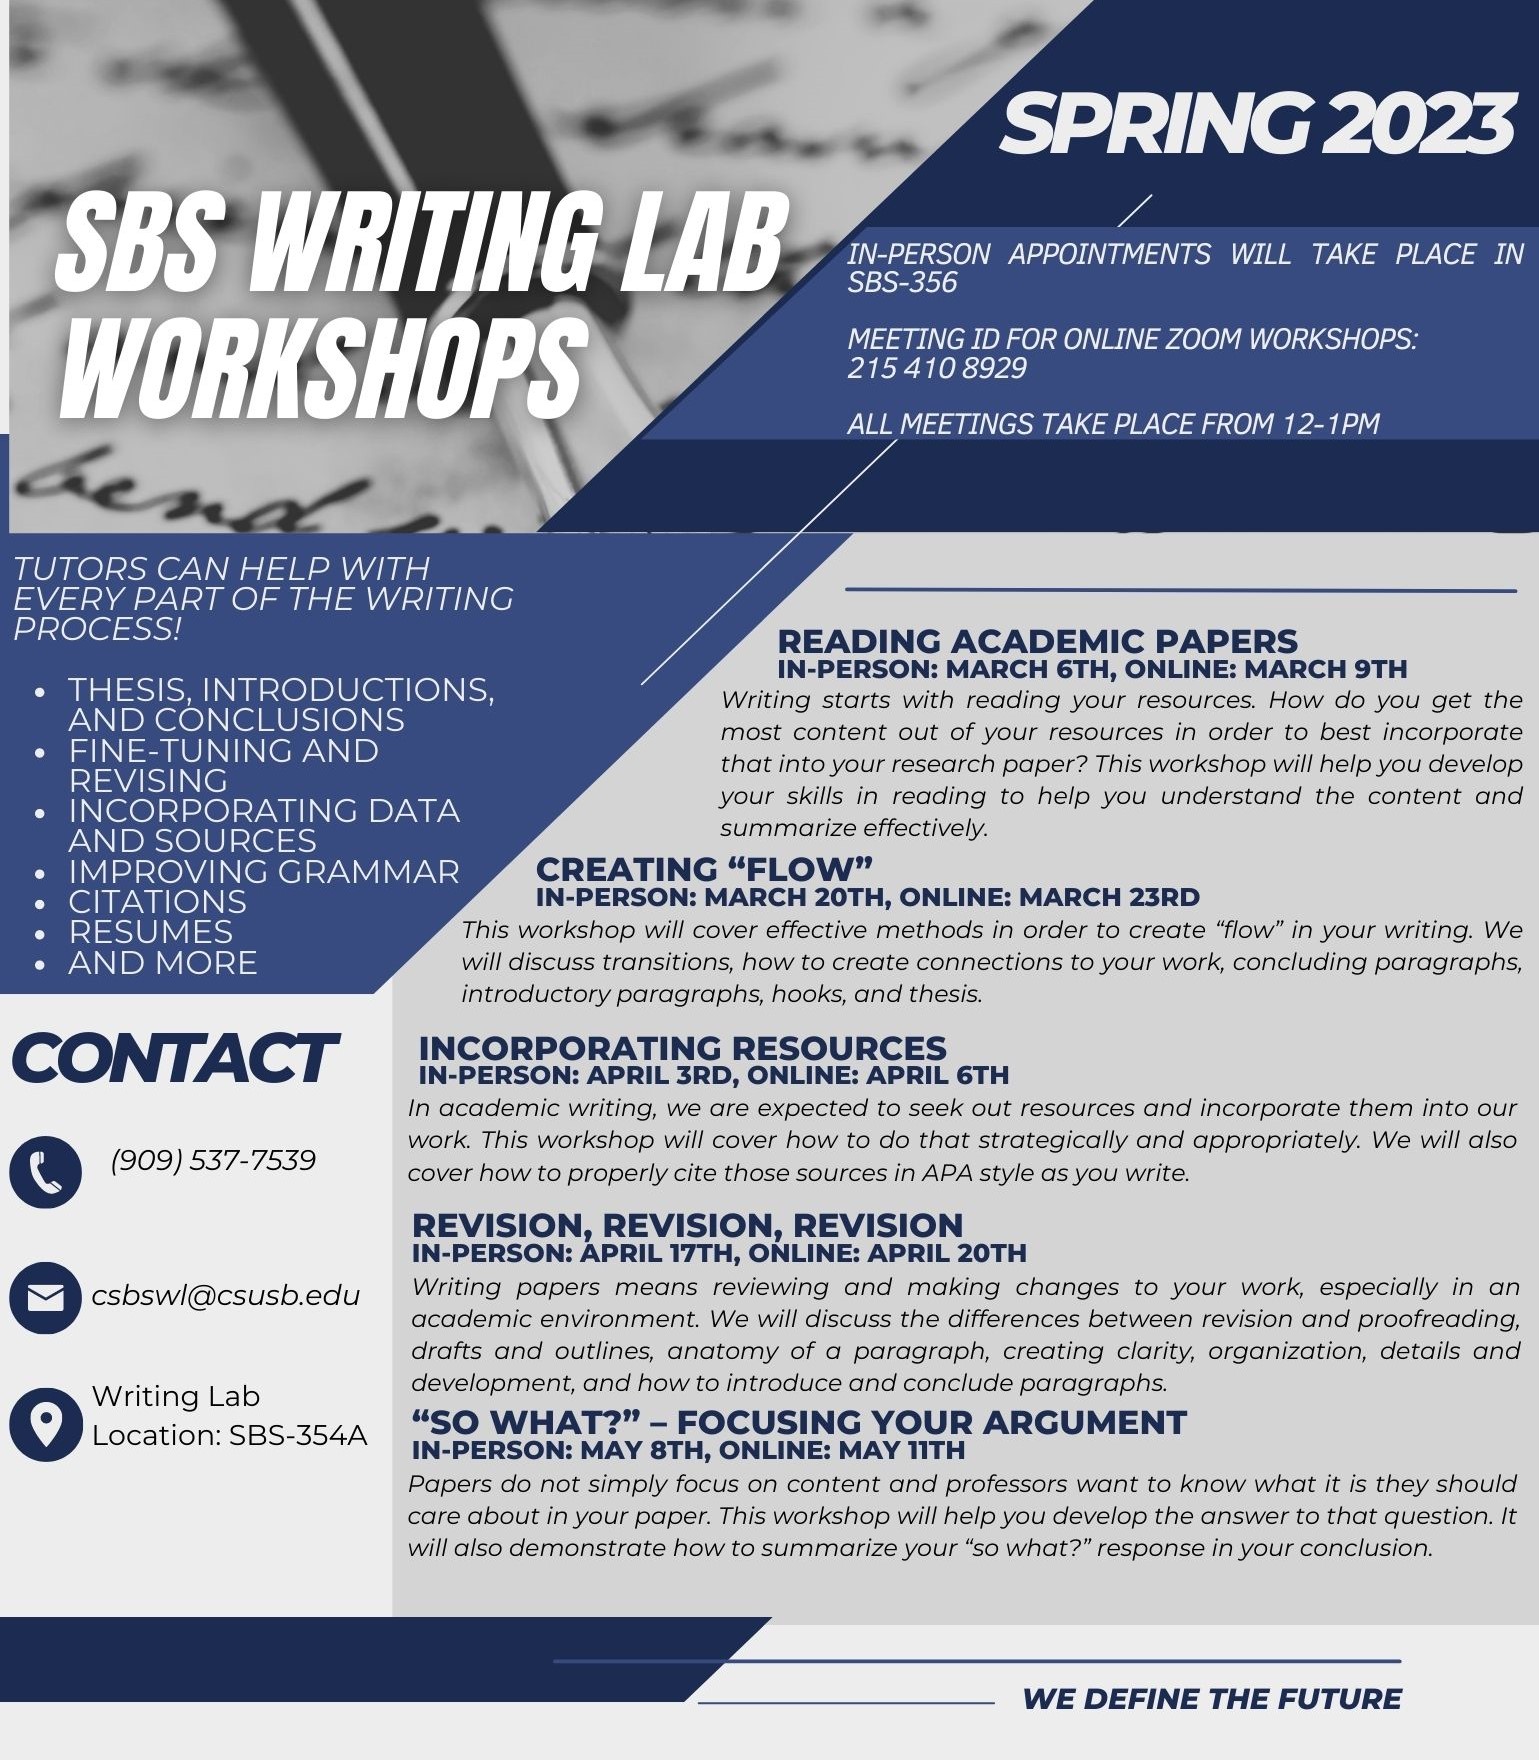 Writing Lab workshops